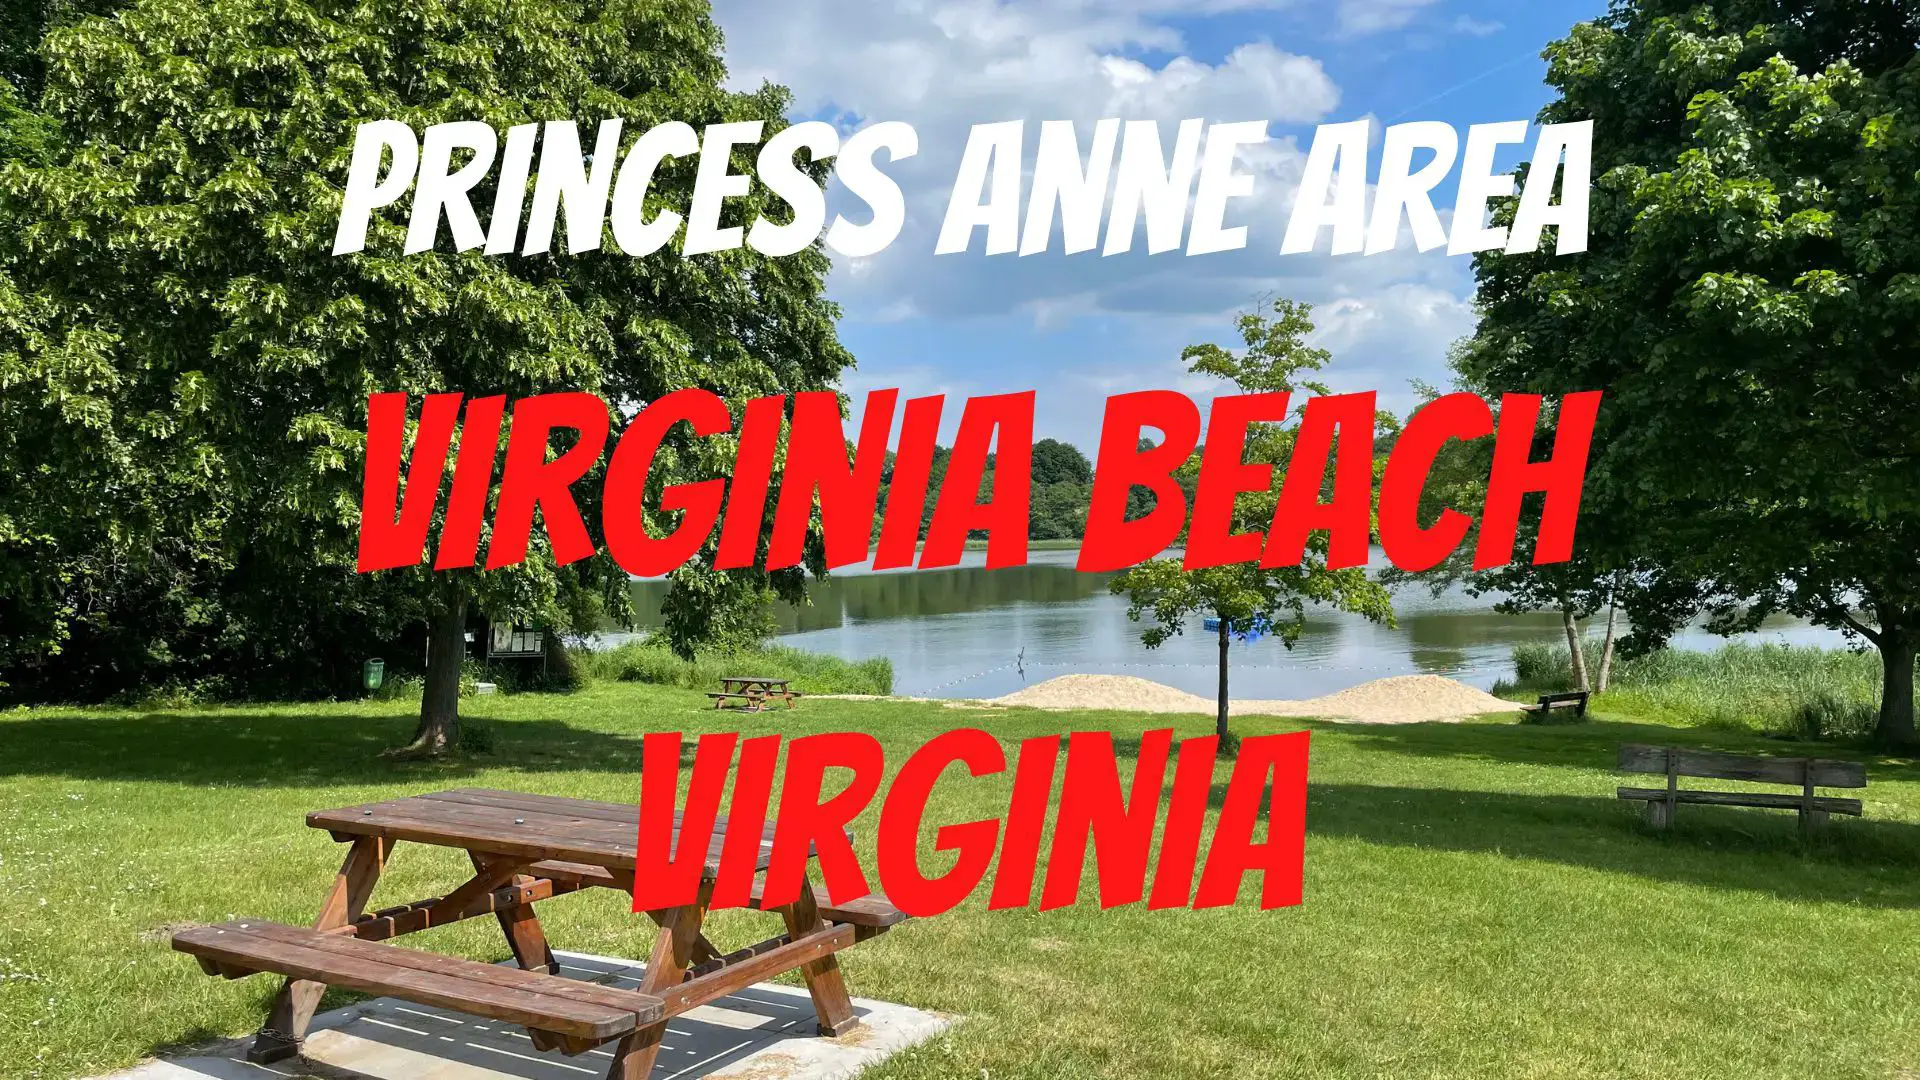 Where to Live Near Virginia Beach’s Princess Anne Area